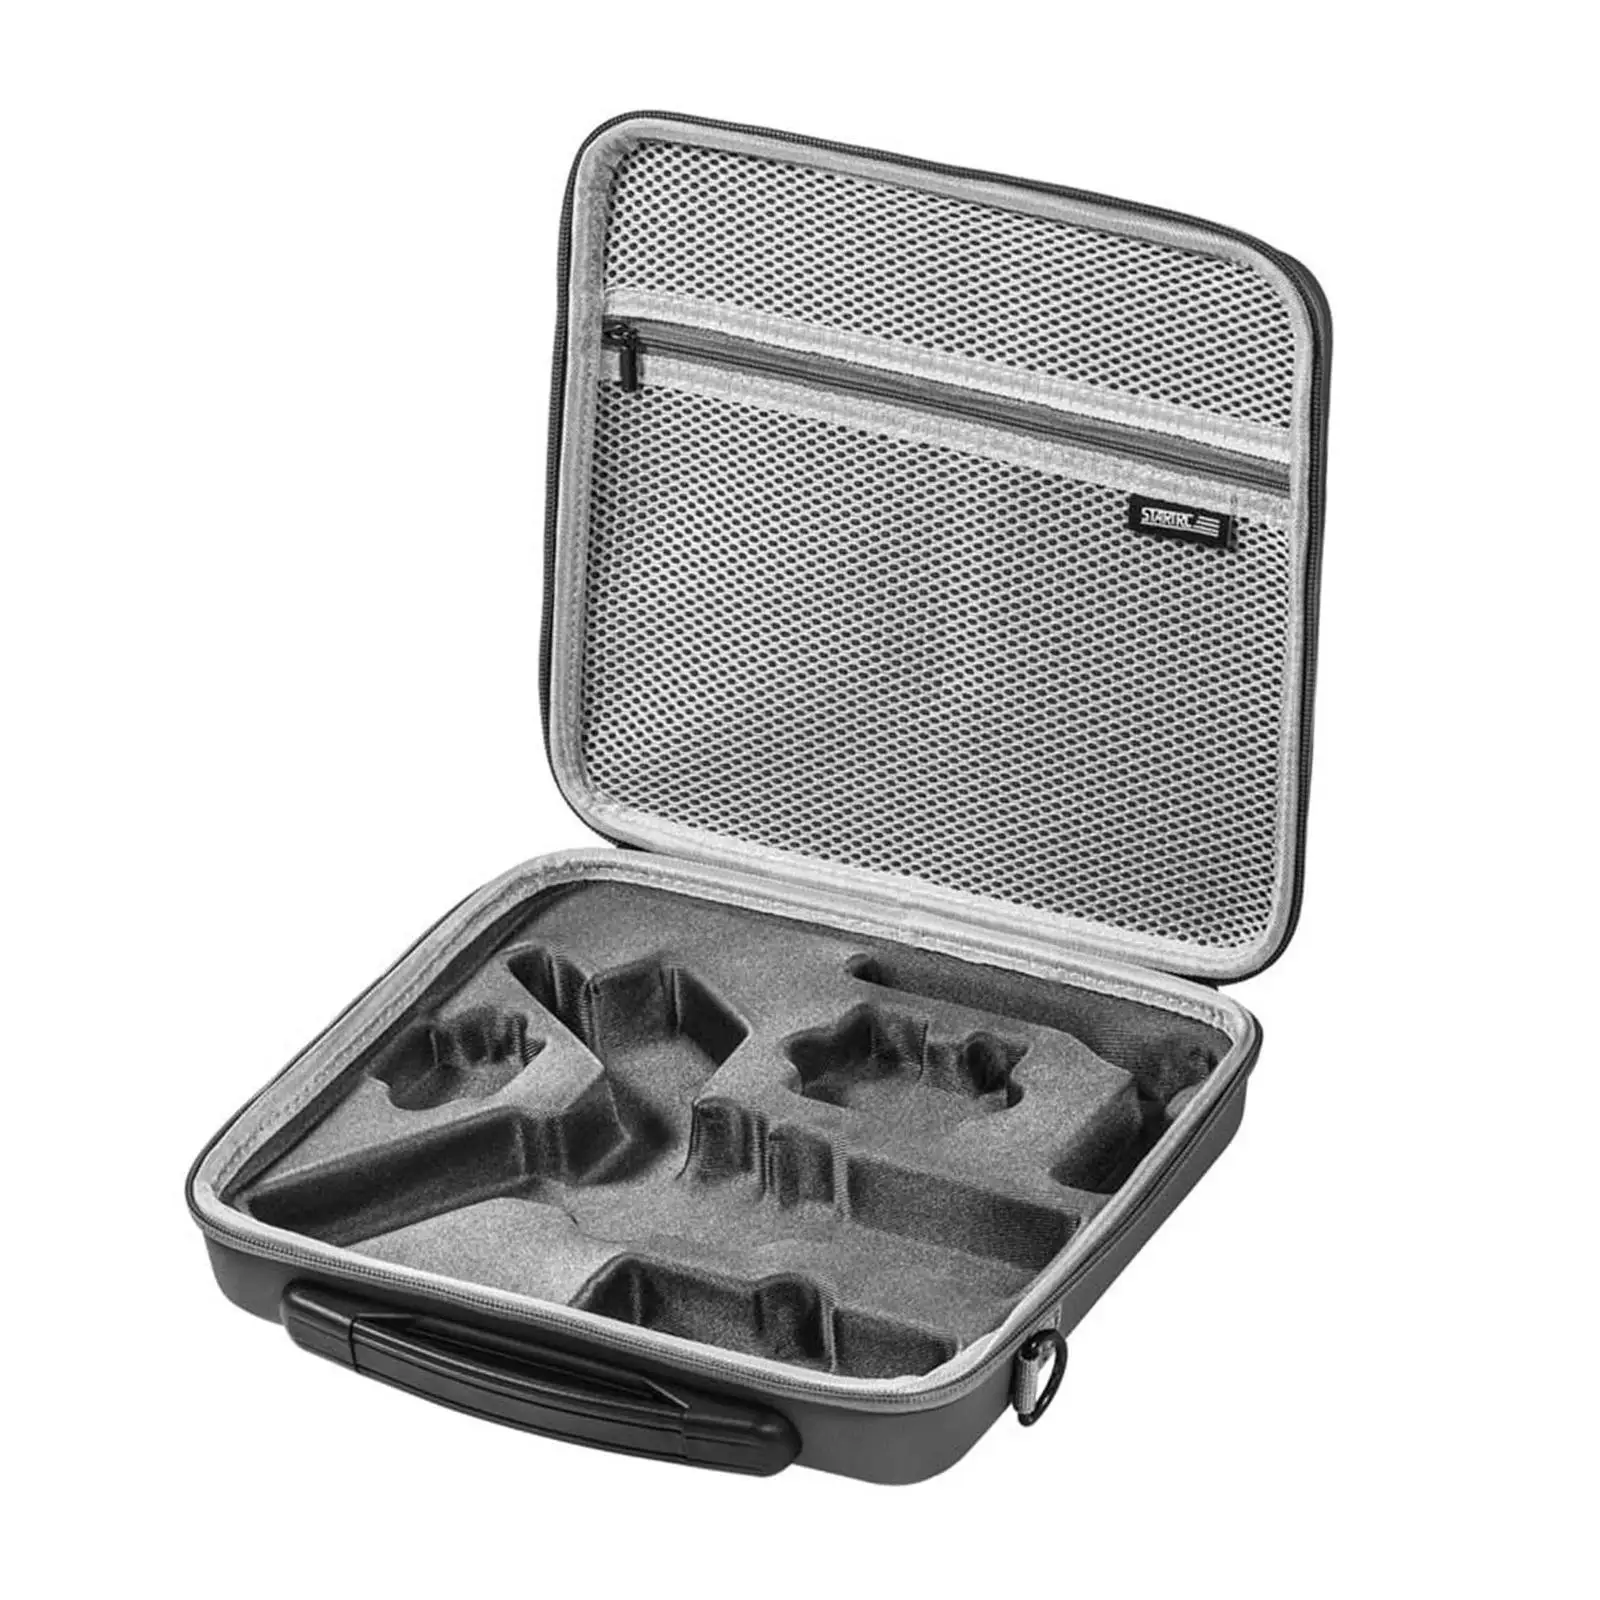 Carrying Case for Ronin RS 3 Mini Protective Case Adjustable Strap Two Way Zipper Shoulder Bag Handbag Travel